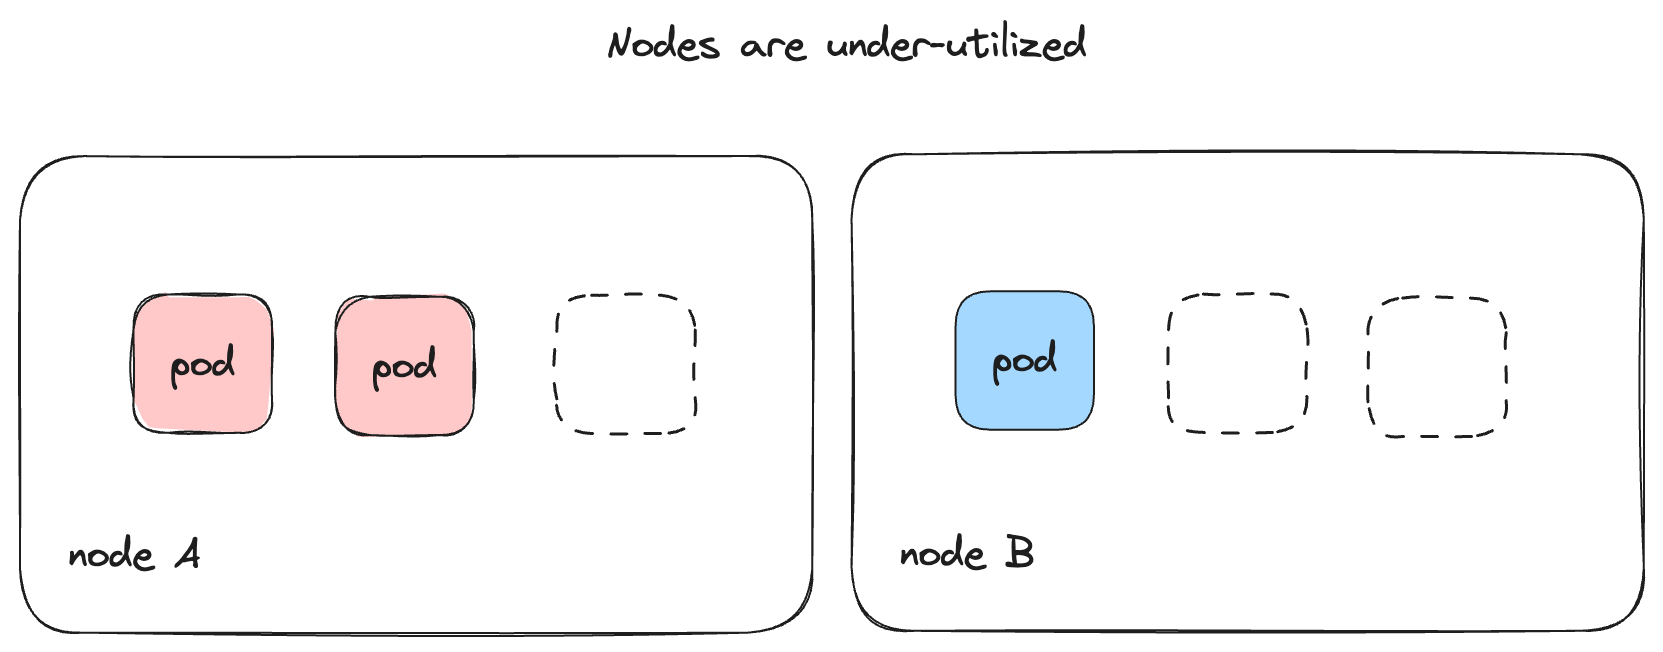 Illustration of nodes being under-utilized